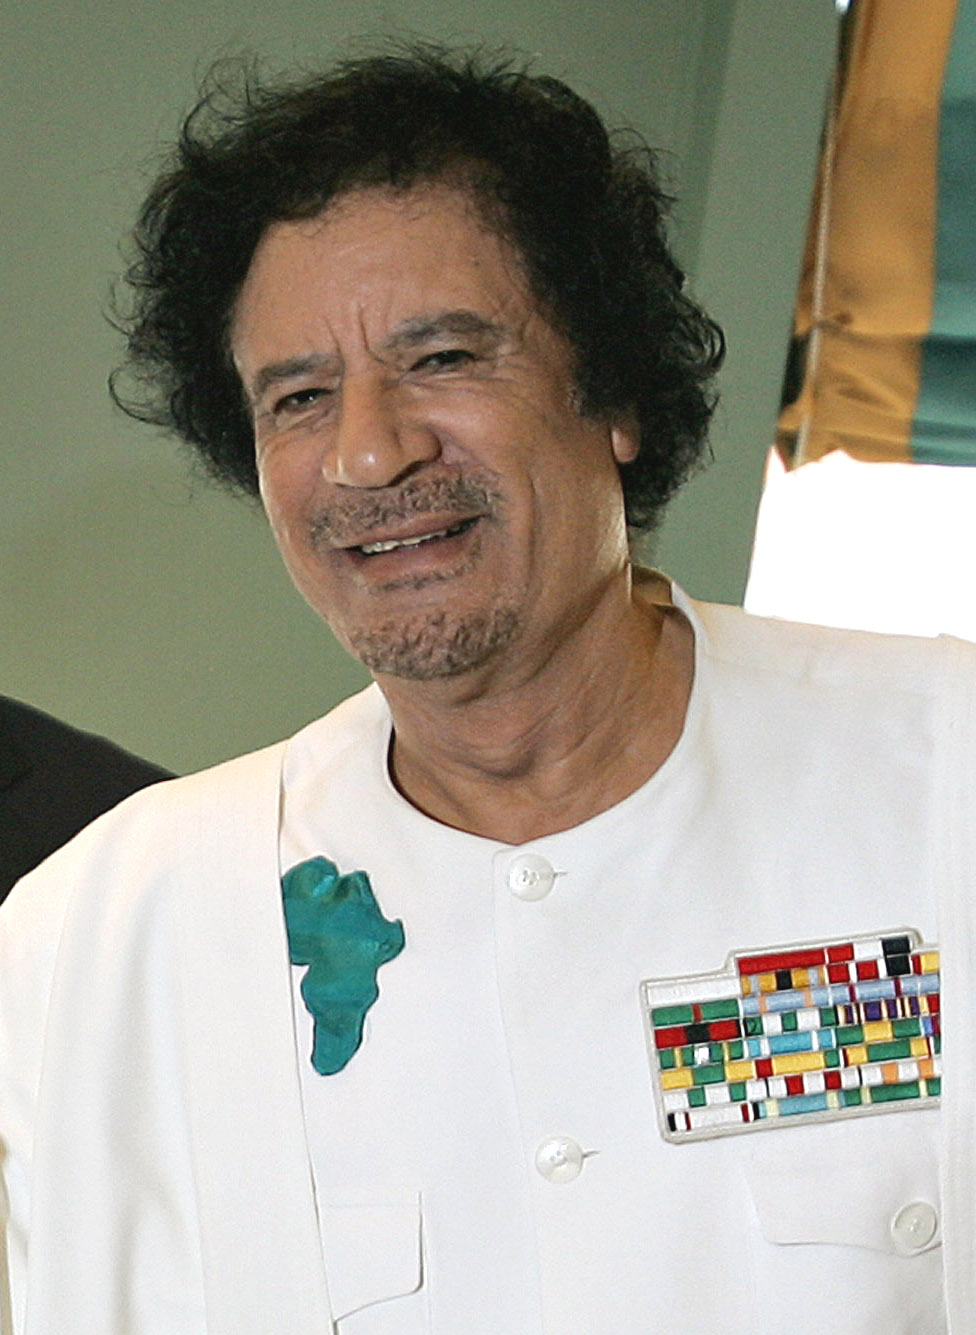 http://www.newsrescue.com/wp-content/uploads/2010/10/muammar_al-gaddafi.jpg